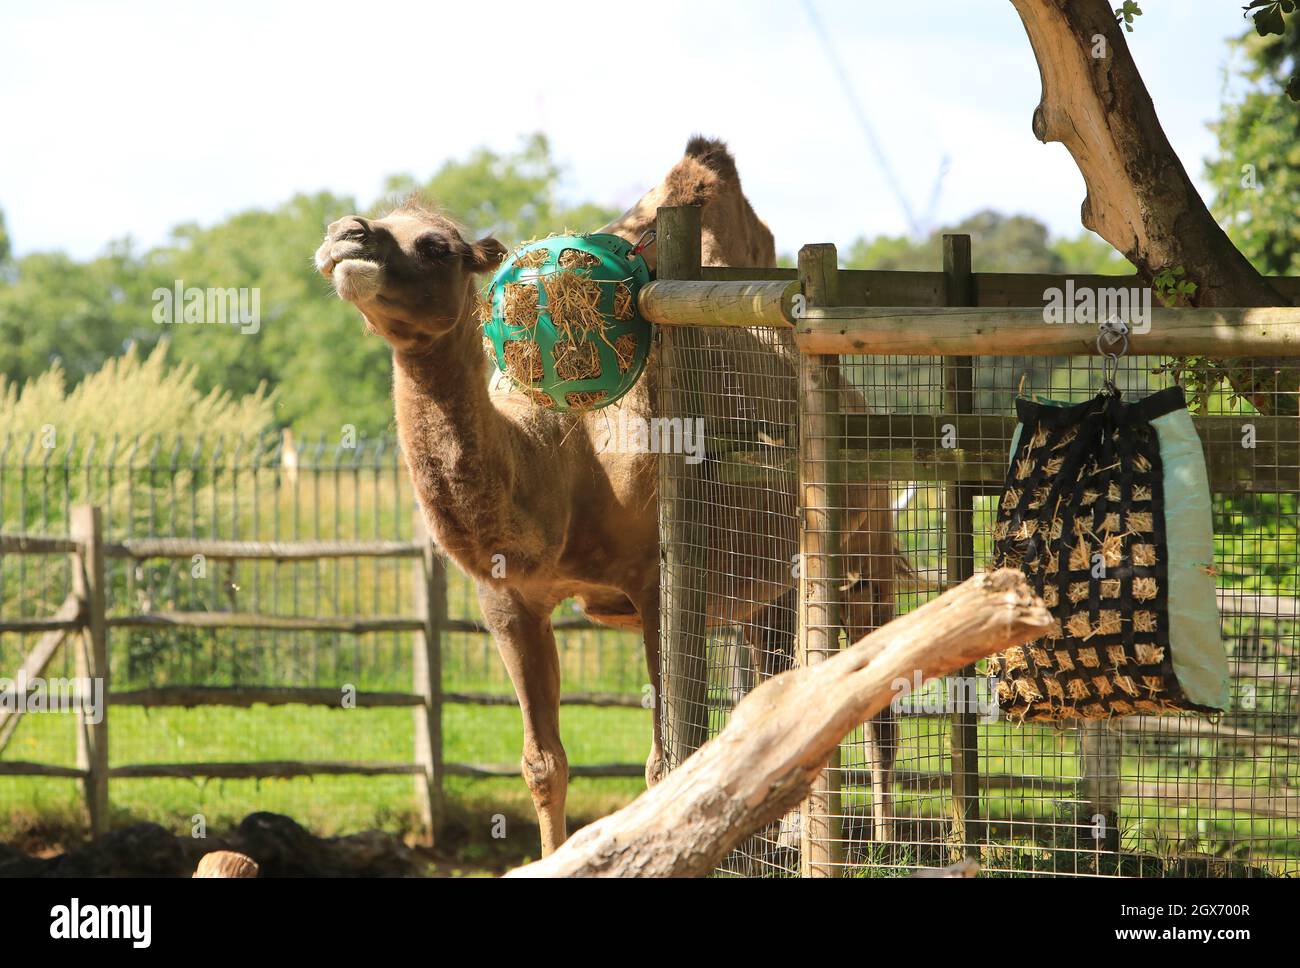 Bactrian camel munching hay, at London Zoo, in summer sunshine, UK Stock Photo